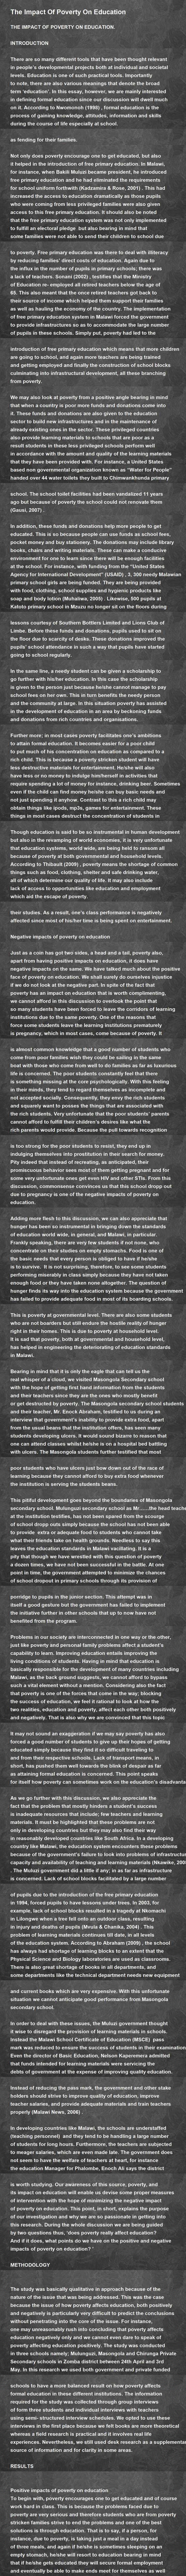 The Impact Of Poverty On Education Poem by Innocent Masina Nkhonyo